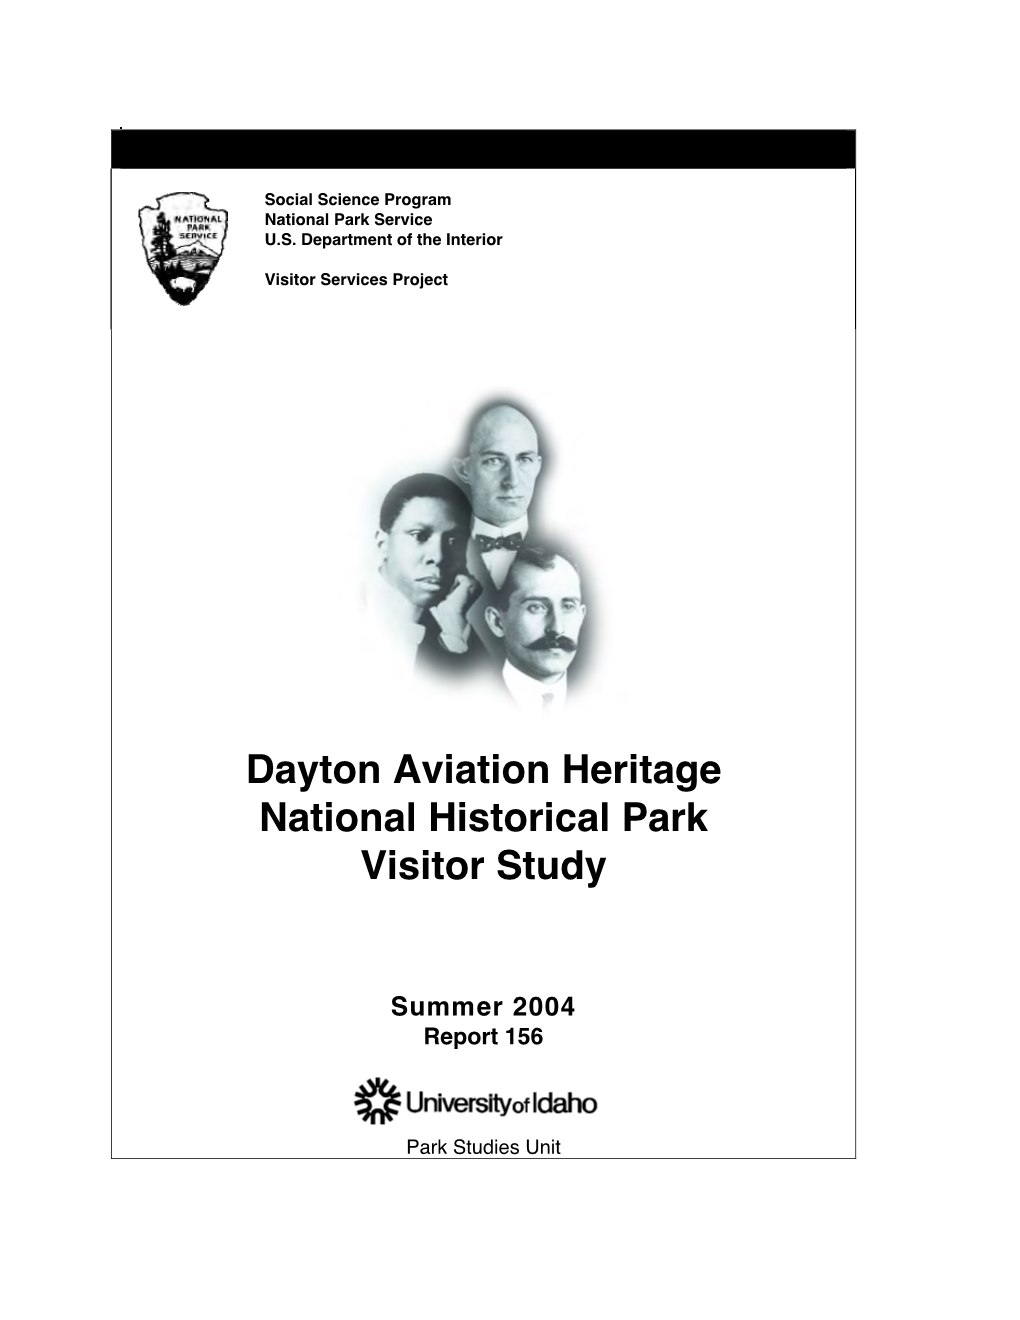 Dayton Aviation Heritage National Historical Park Visitor Study